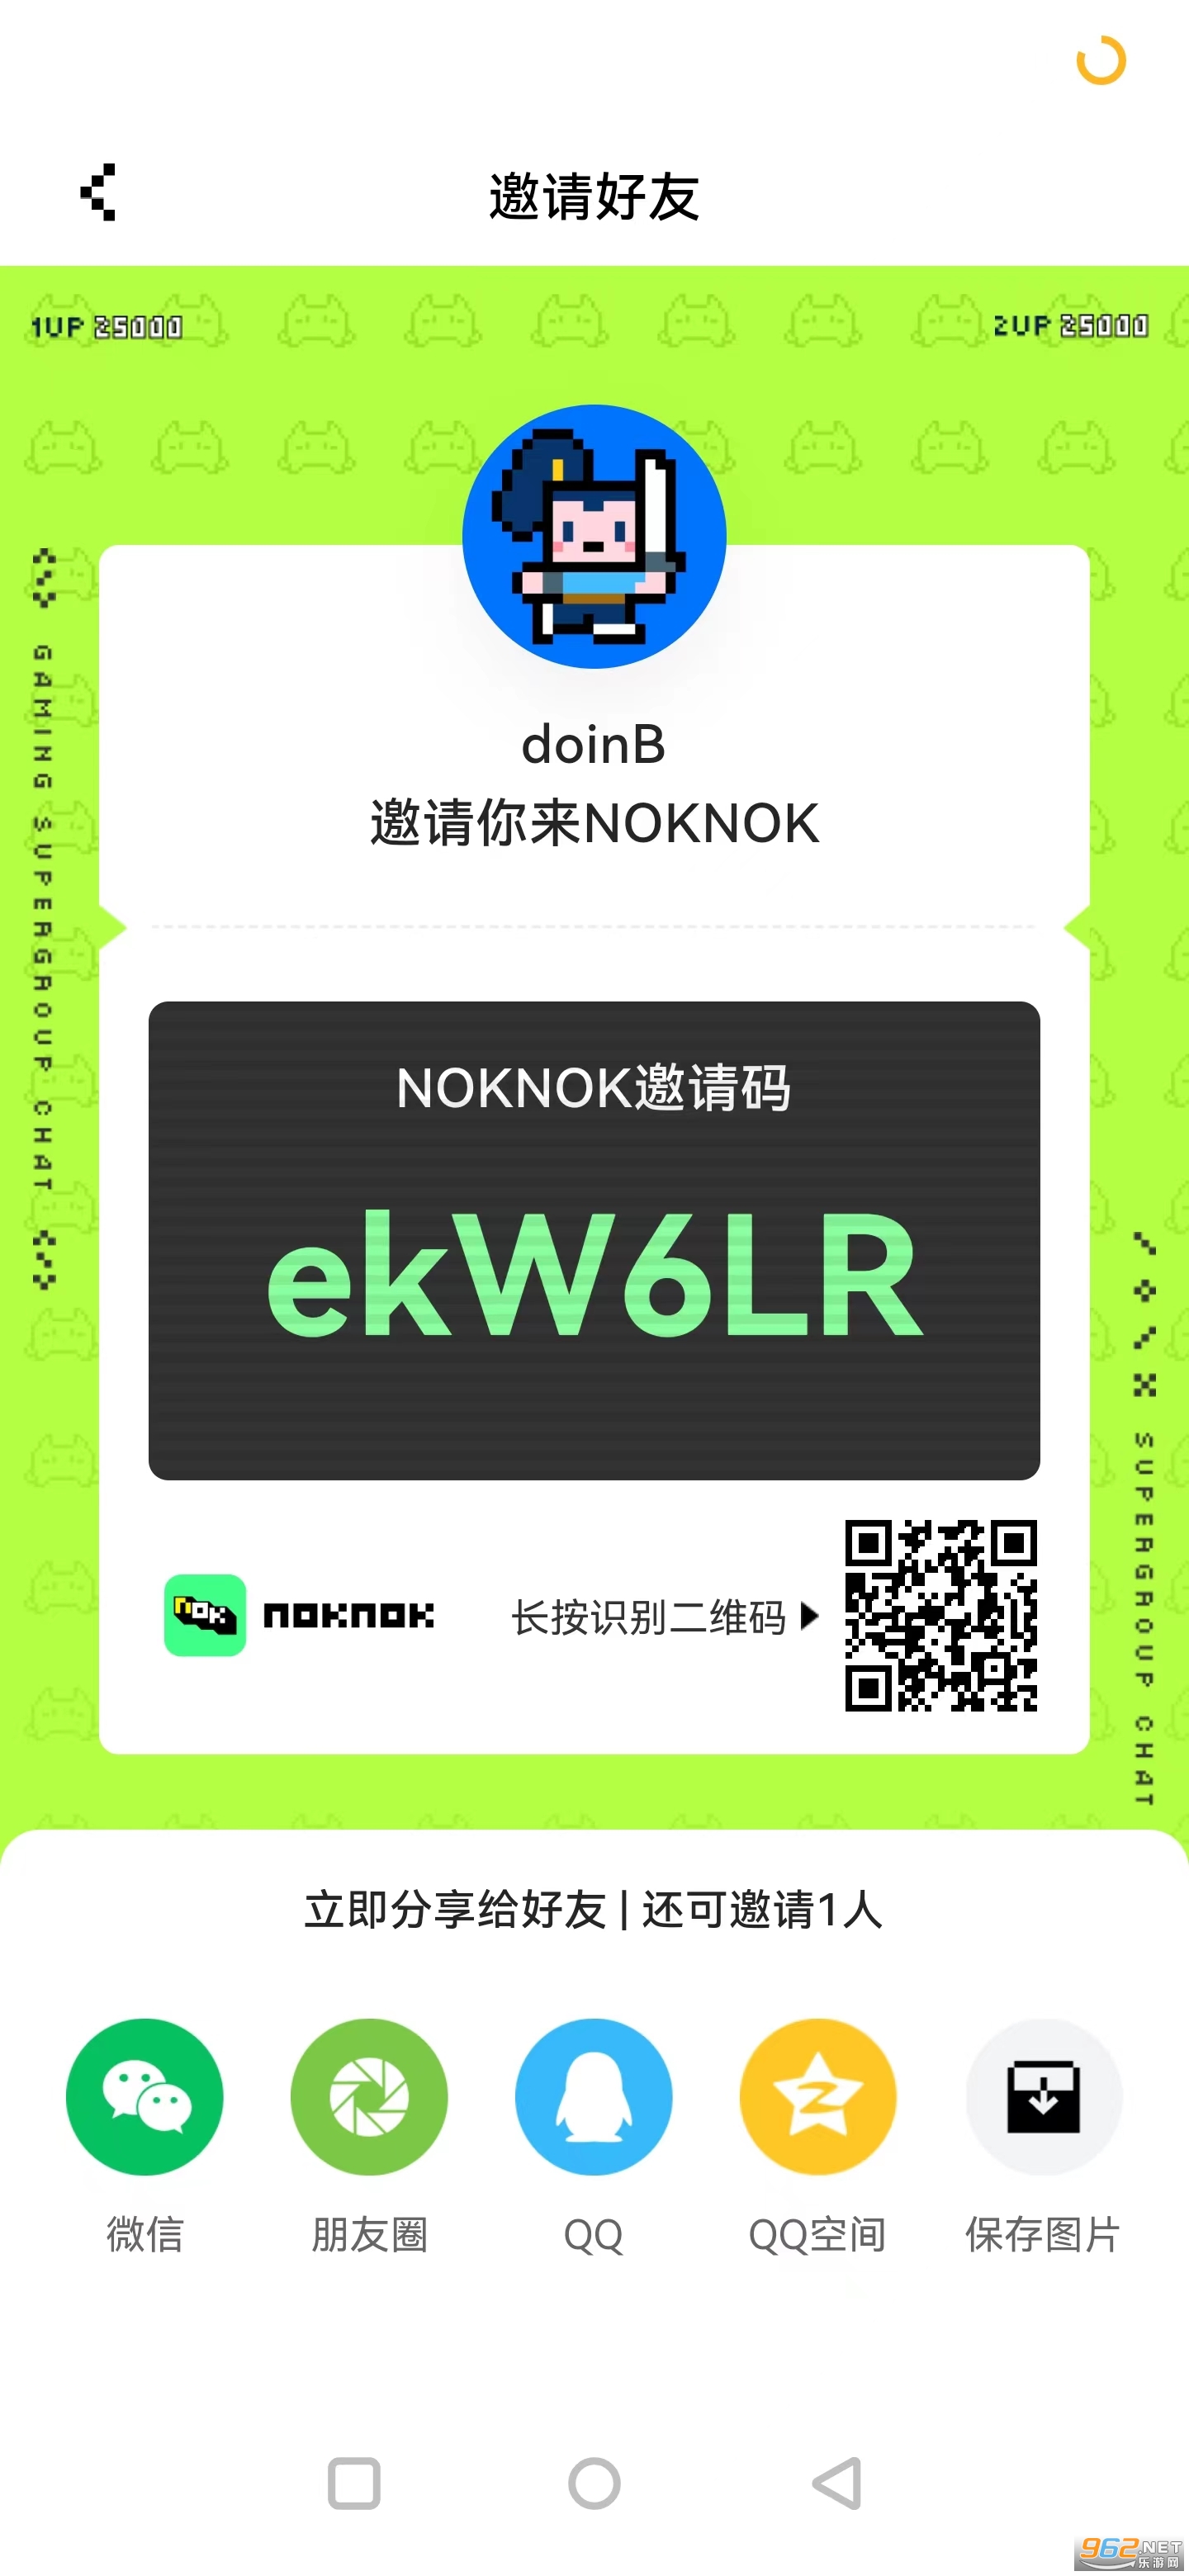 NokNok腾讯闹闹社区v0.8.3.96 官方版截图1